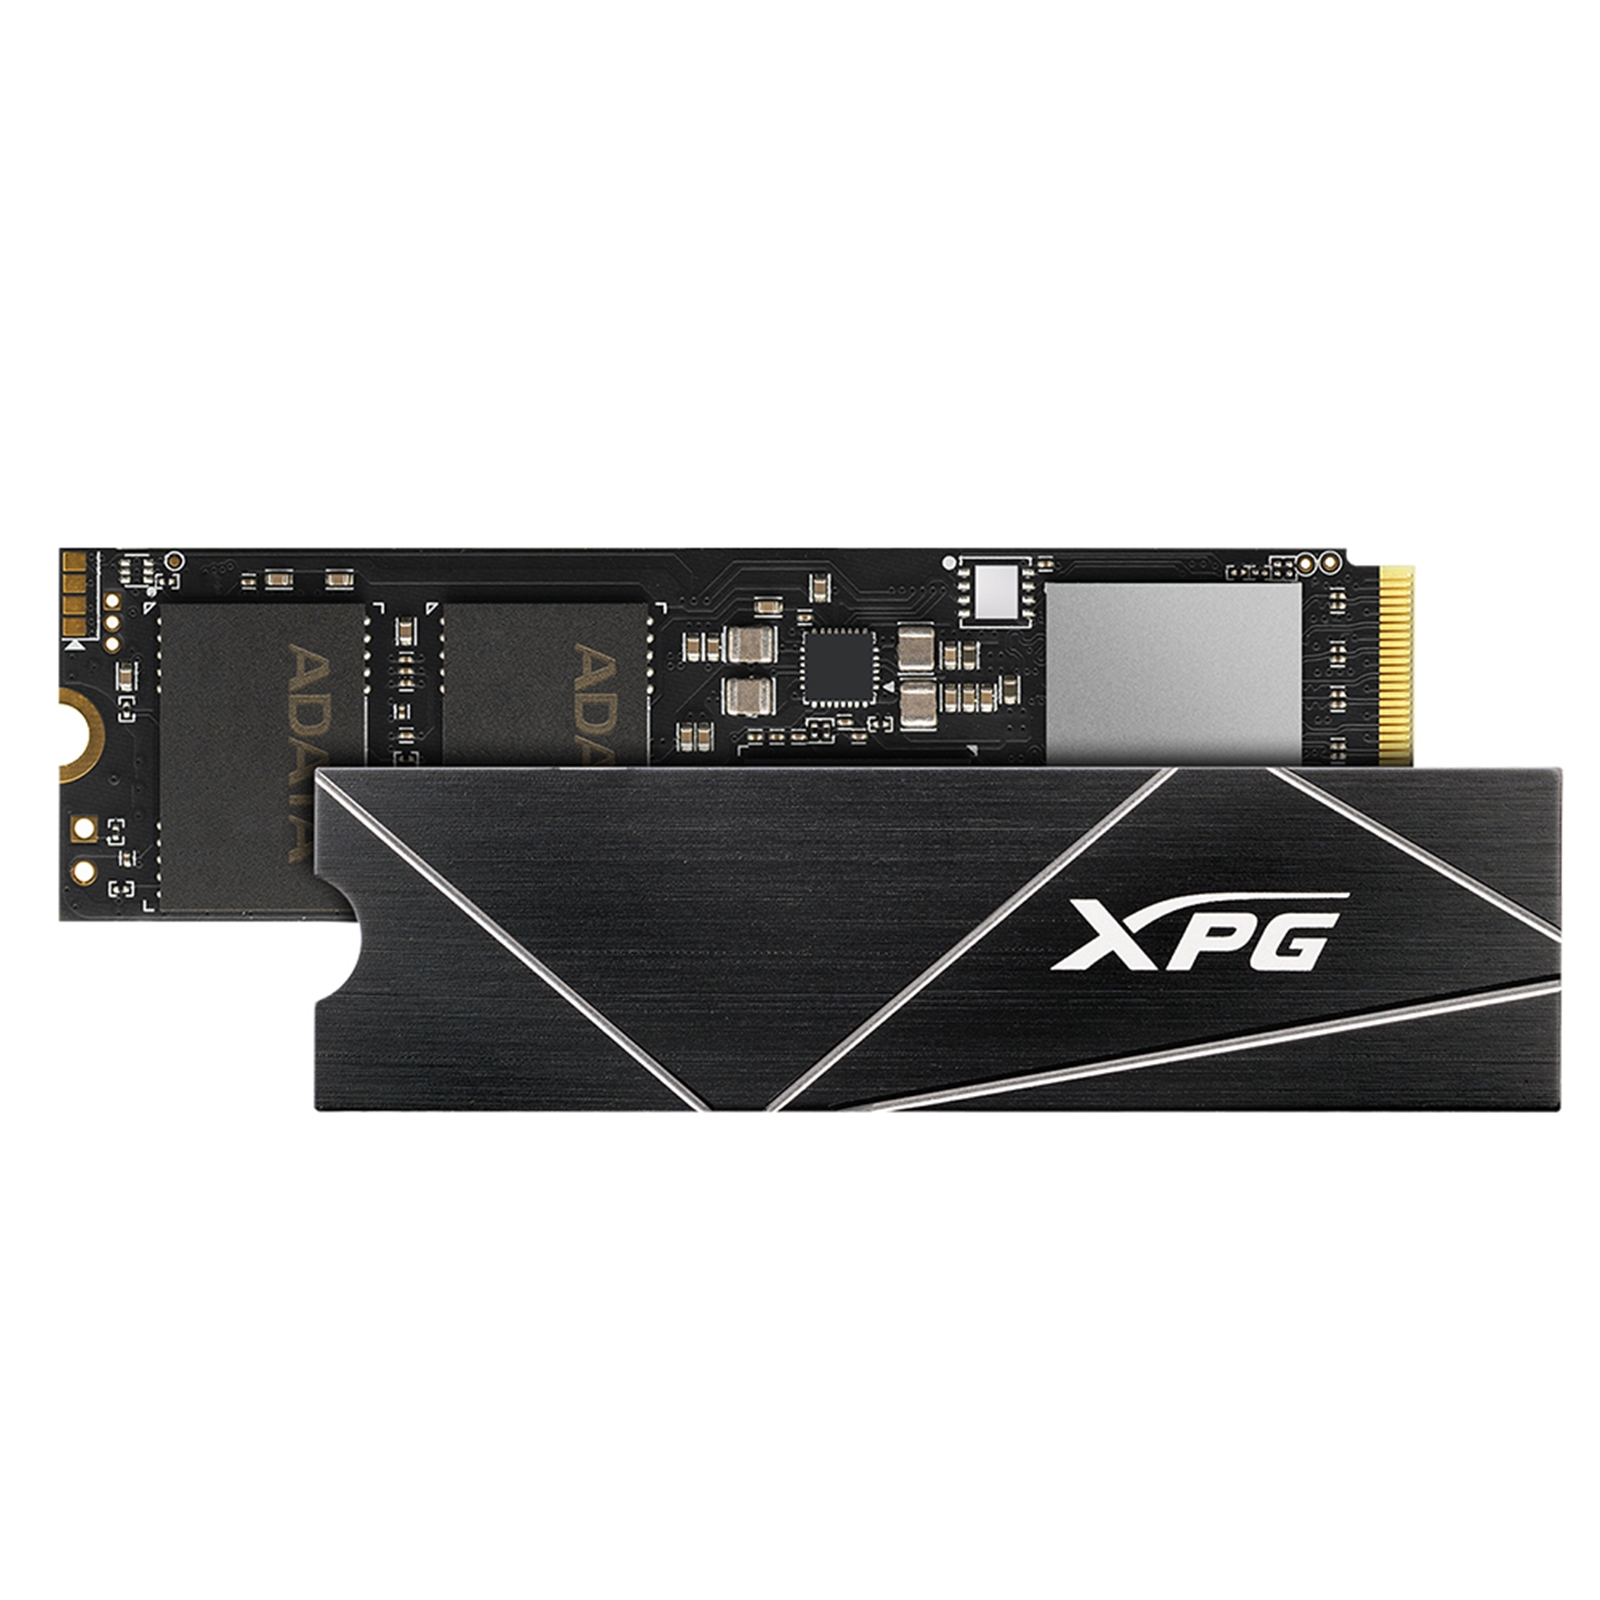 Adata XPG GAMMIX S70 Blade (AGAMMIXS70B-2T-CS) 2TB NVMe M.2 Interface, PCIe x4, 2280 Length, Read 7400MB/s, Write 6700MB/s, 5 Year Warranty